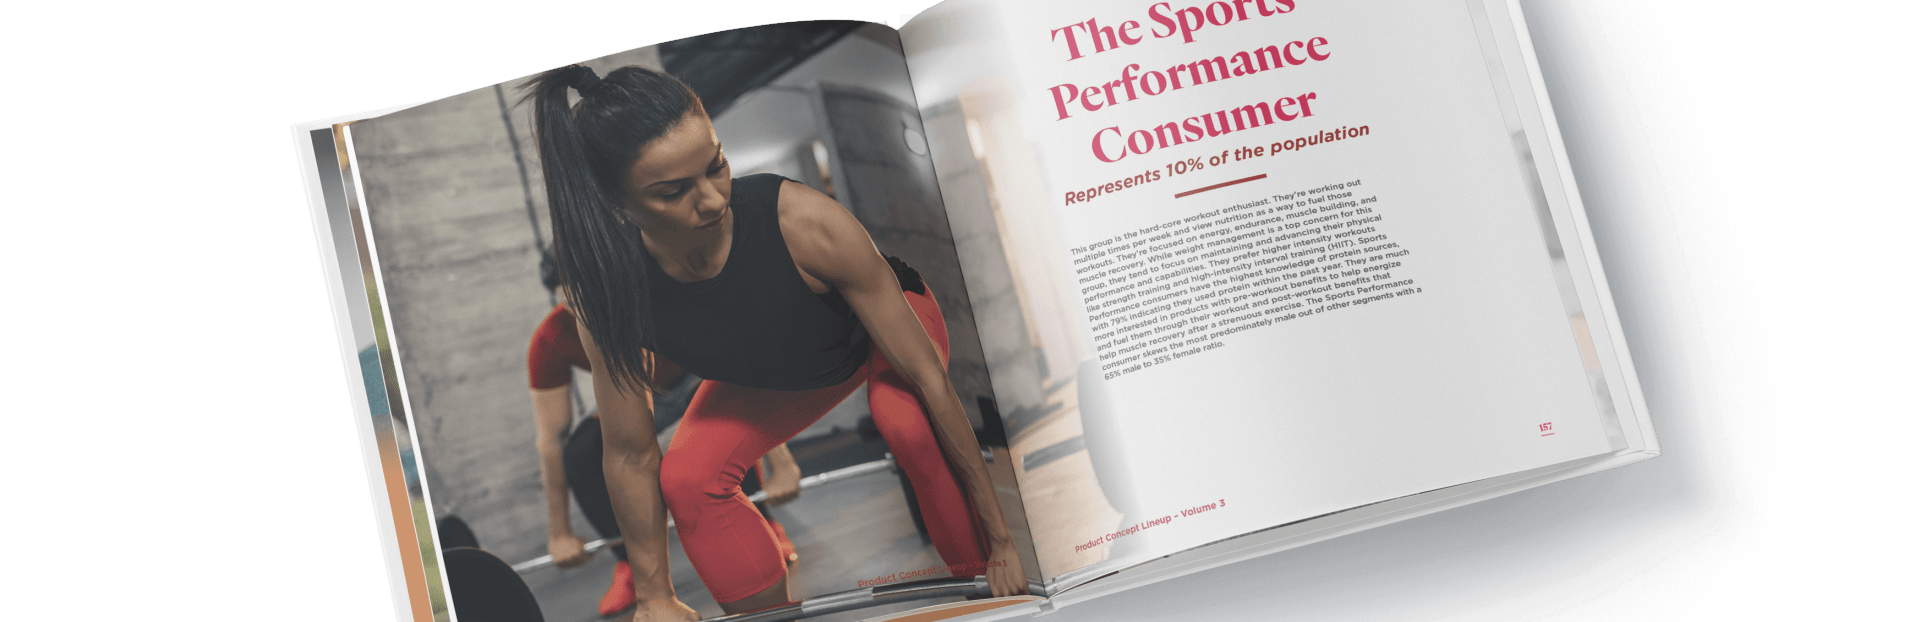 Sports Performance Consumer